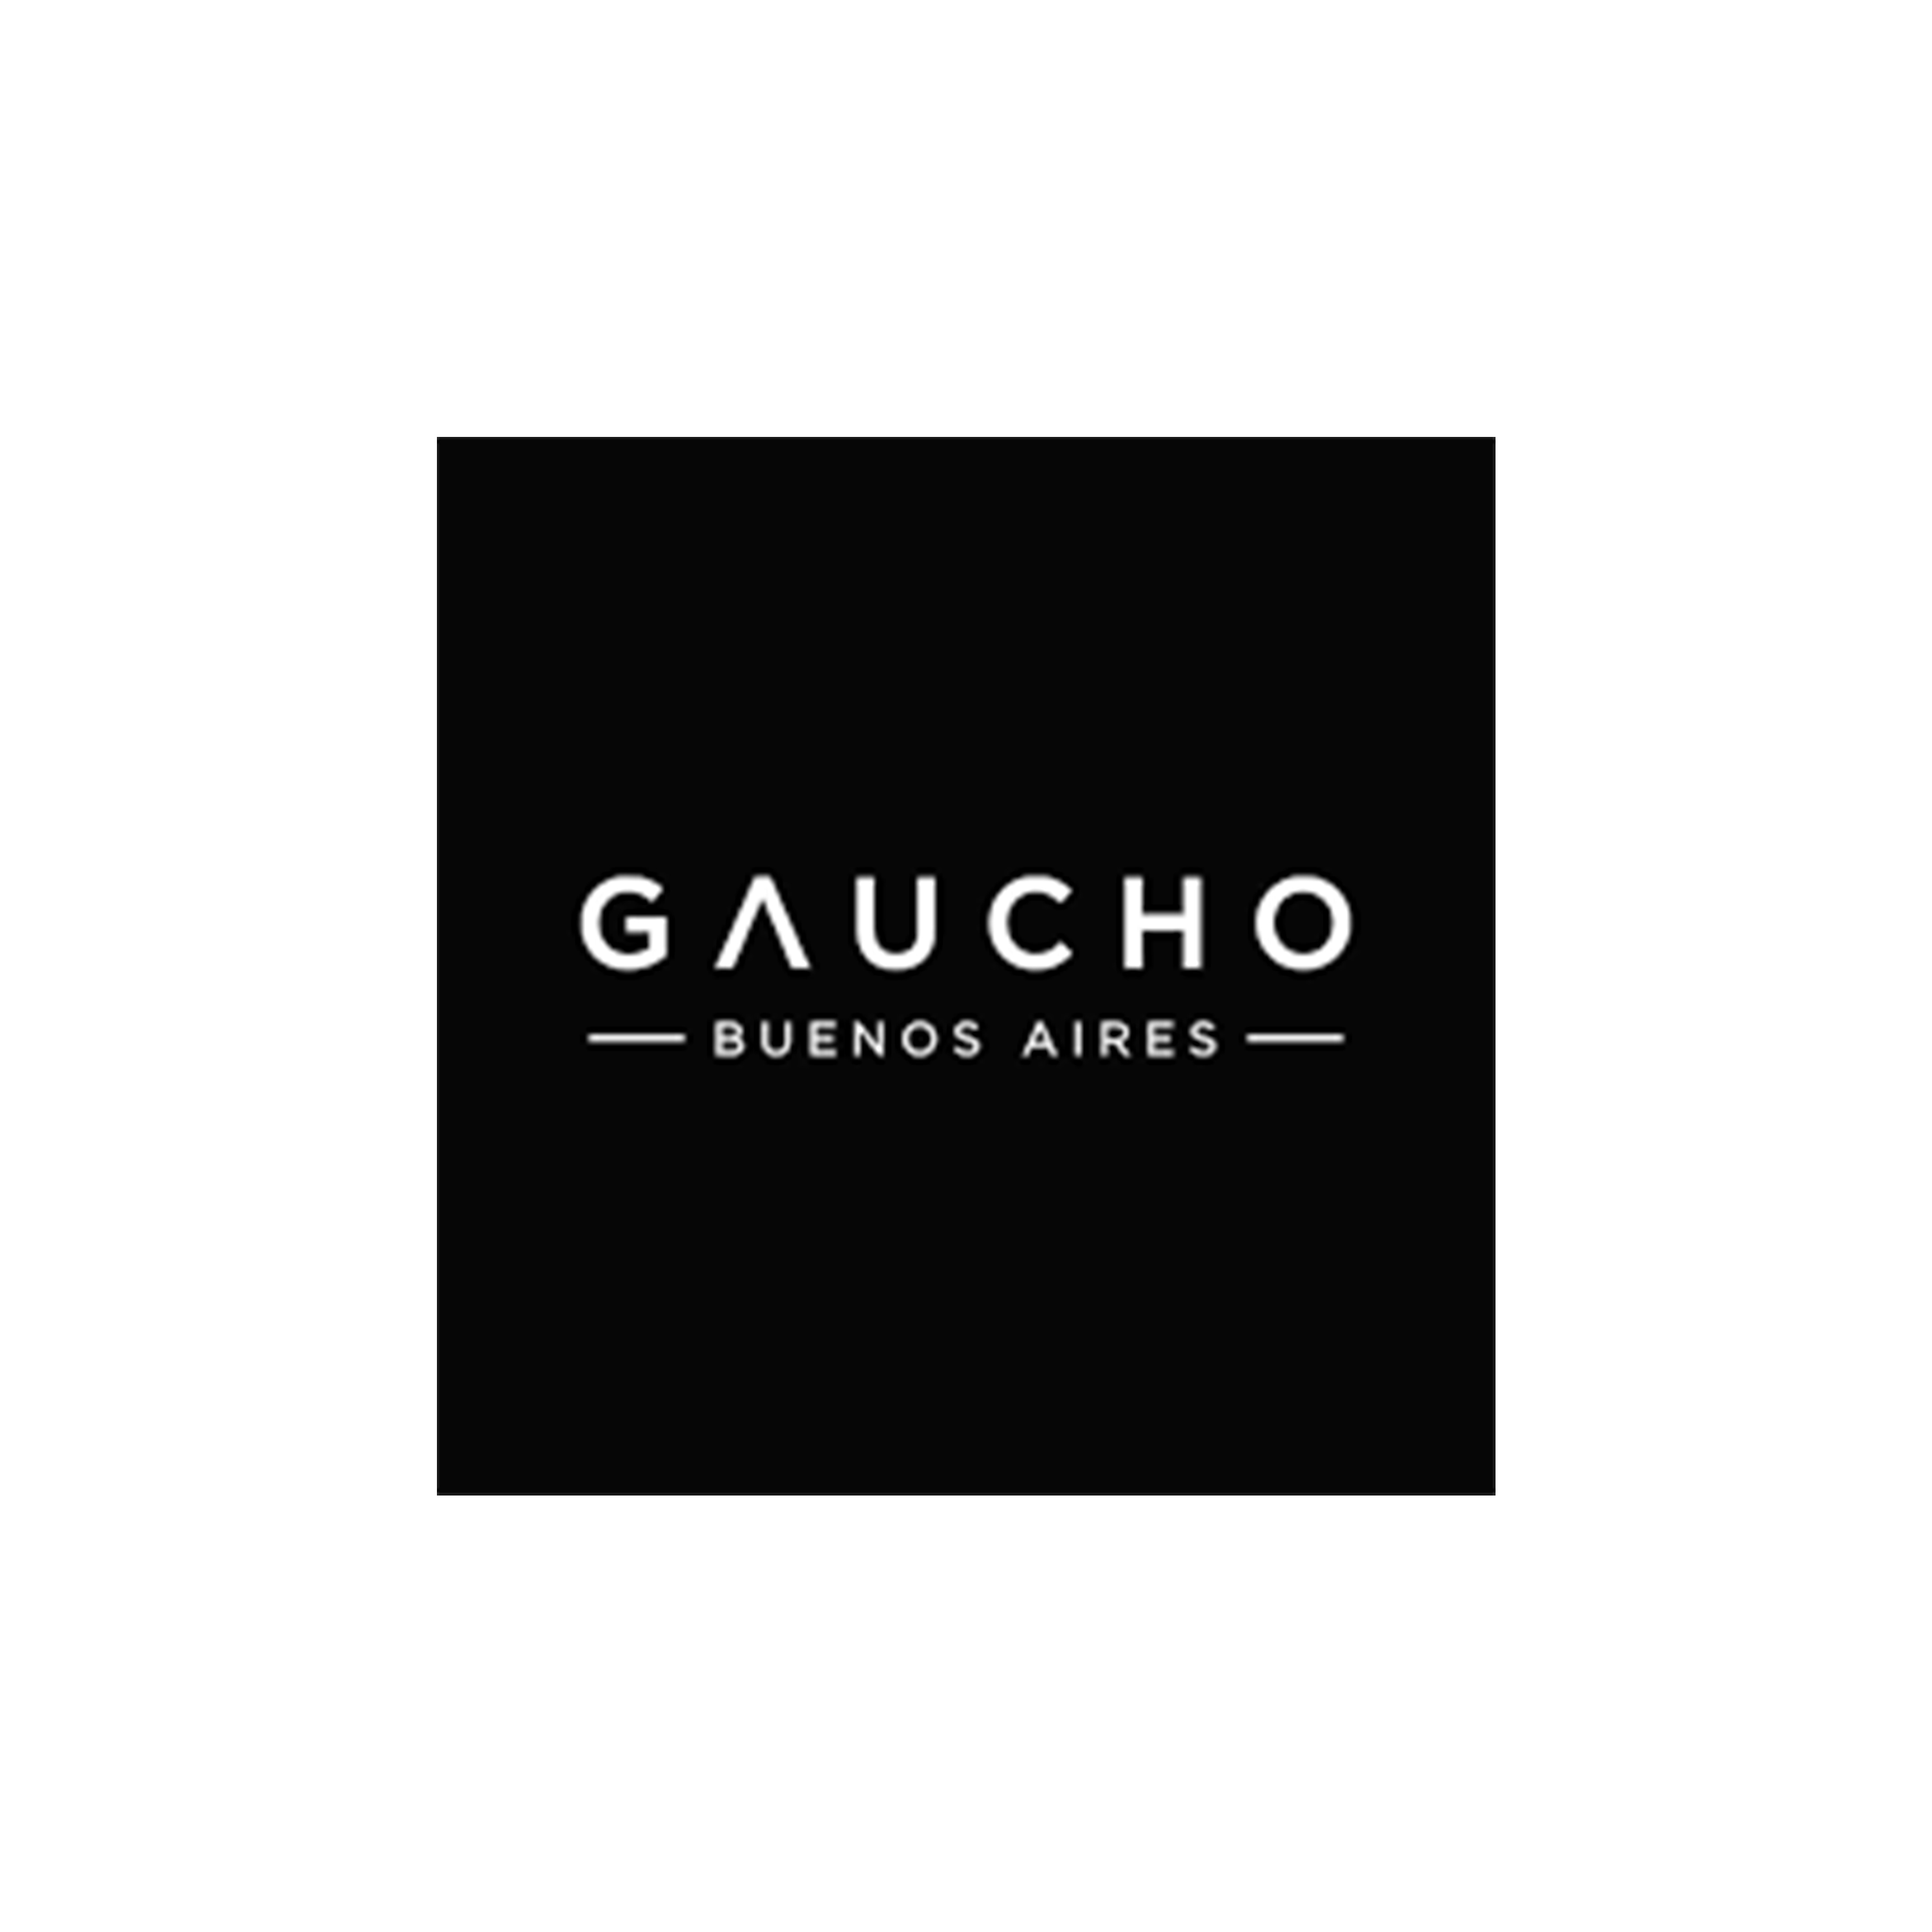 Gaucho Buenos Aires logo